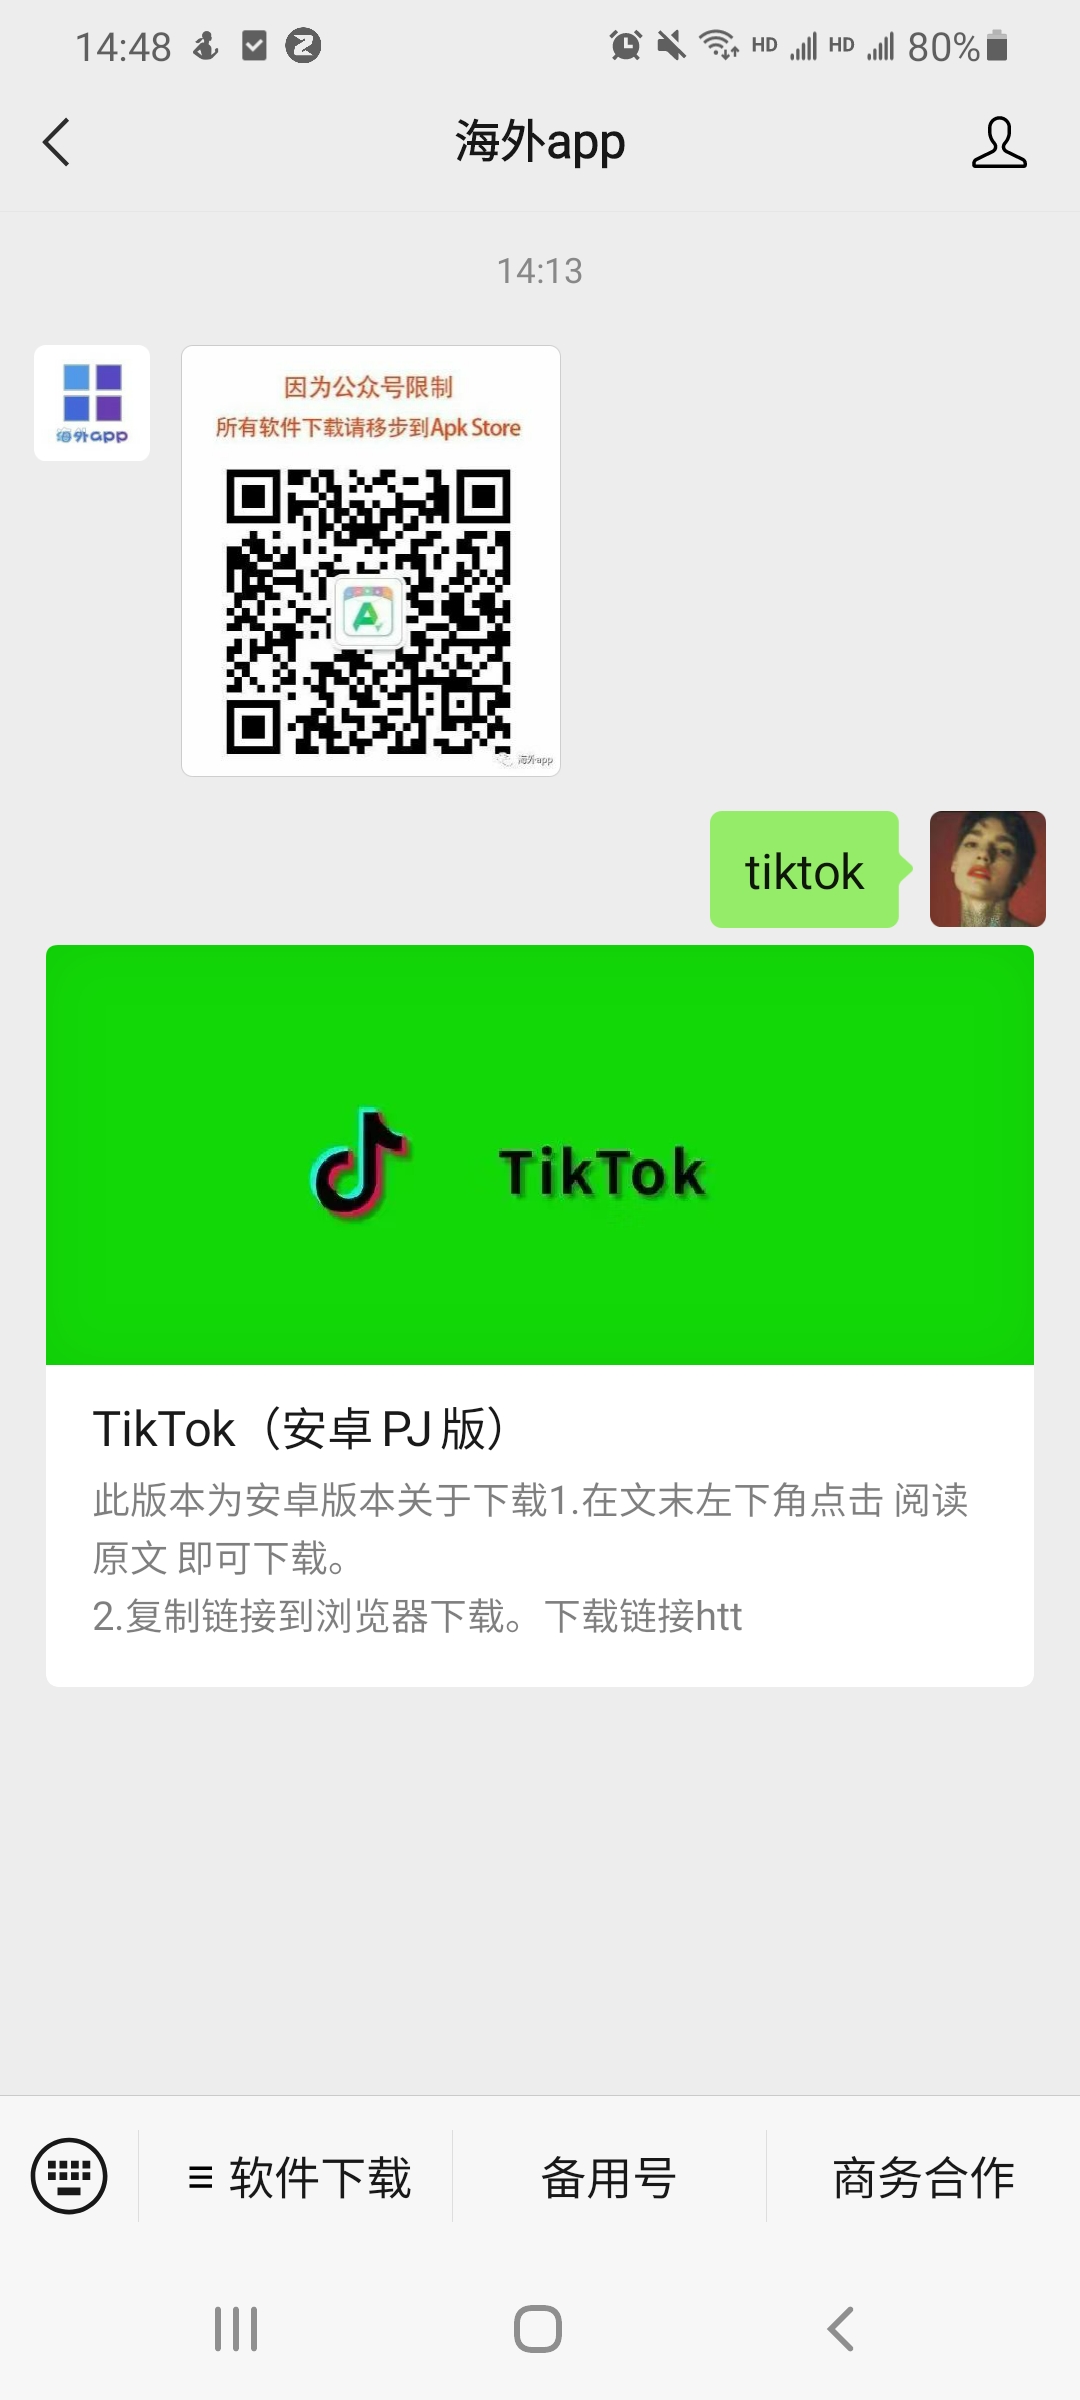 TikTok-TikTok官网:抖音国际海外版-禾坡网